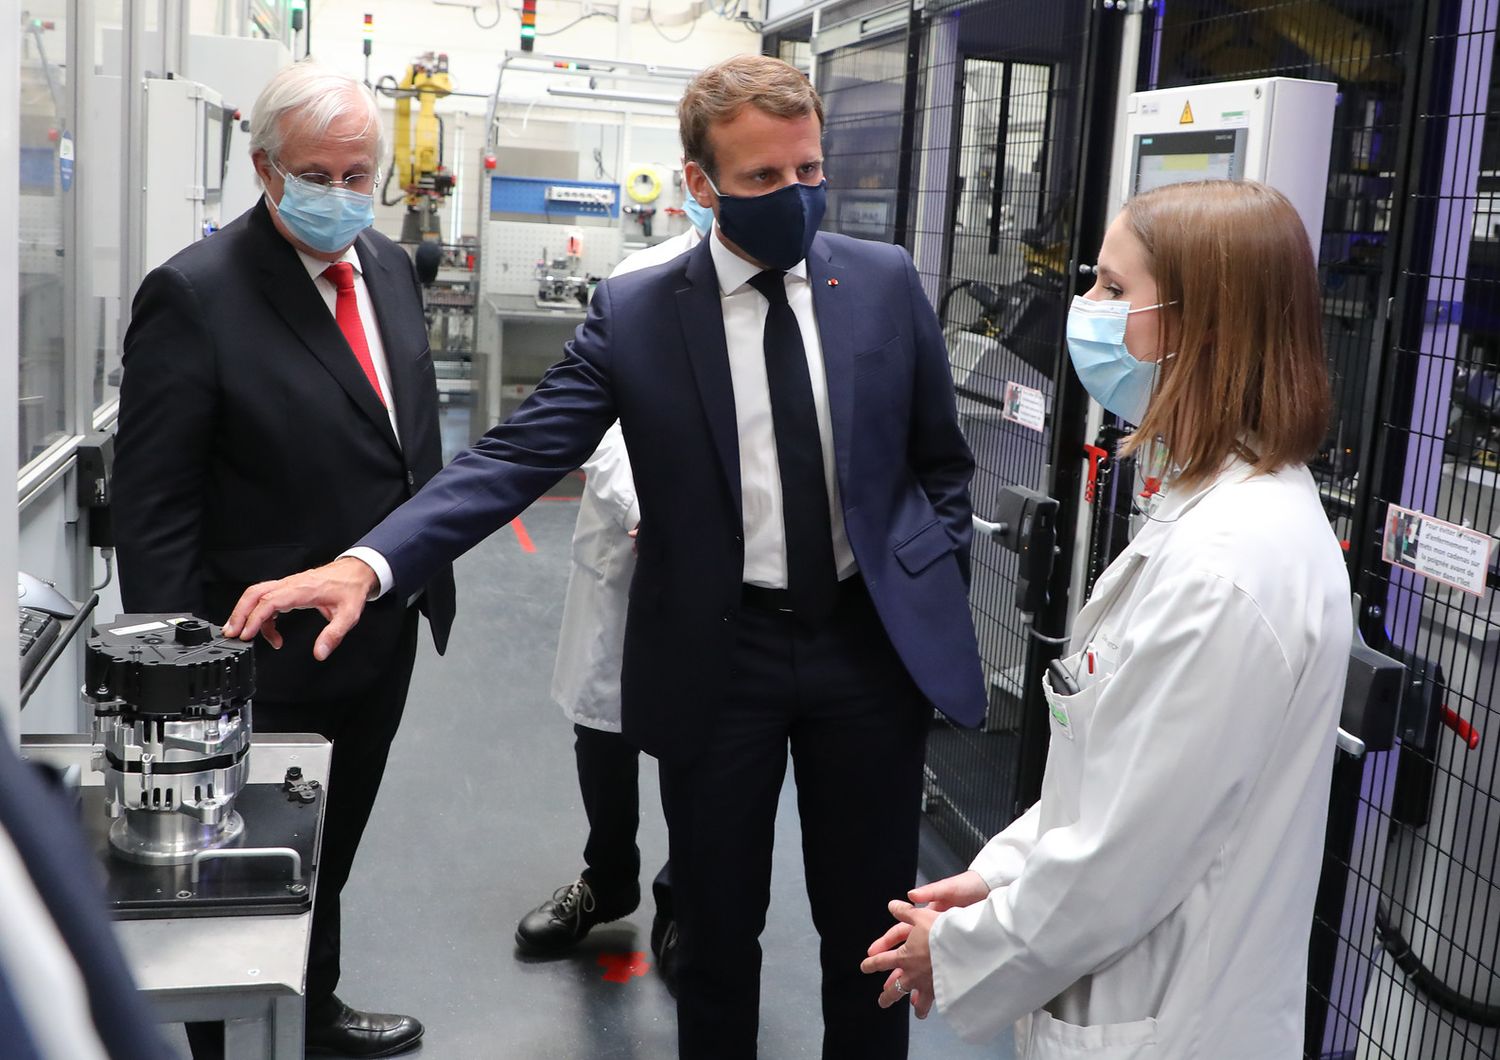 Il presidente francese Emmanuel Macron durante la visita alla fabbrica automotive di Etaples